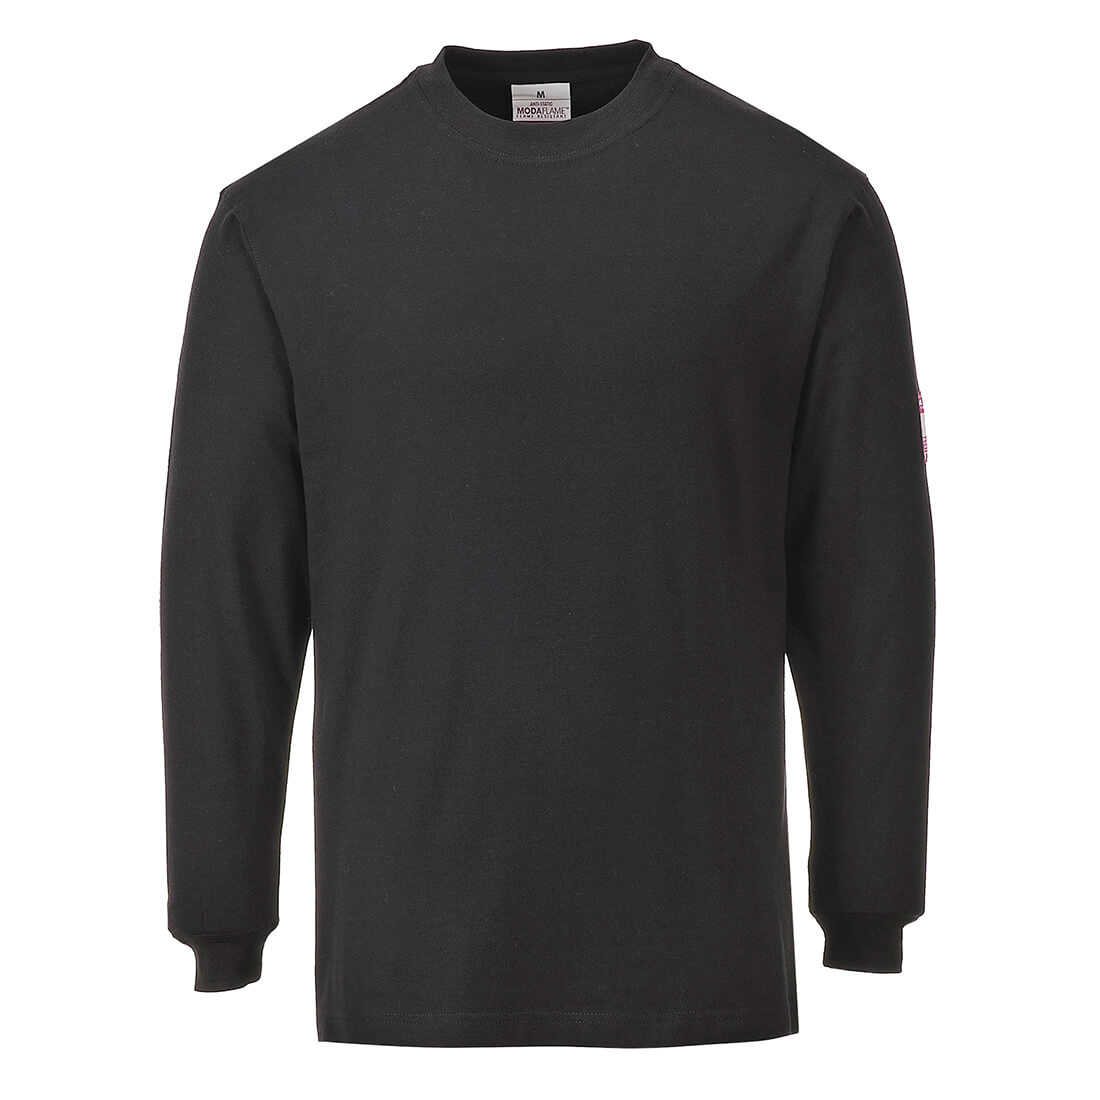 Image of Modaflame Mens Flame Resistant Antistatic T Shirt Black L